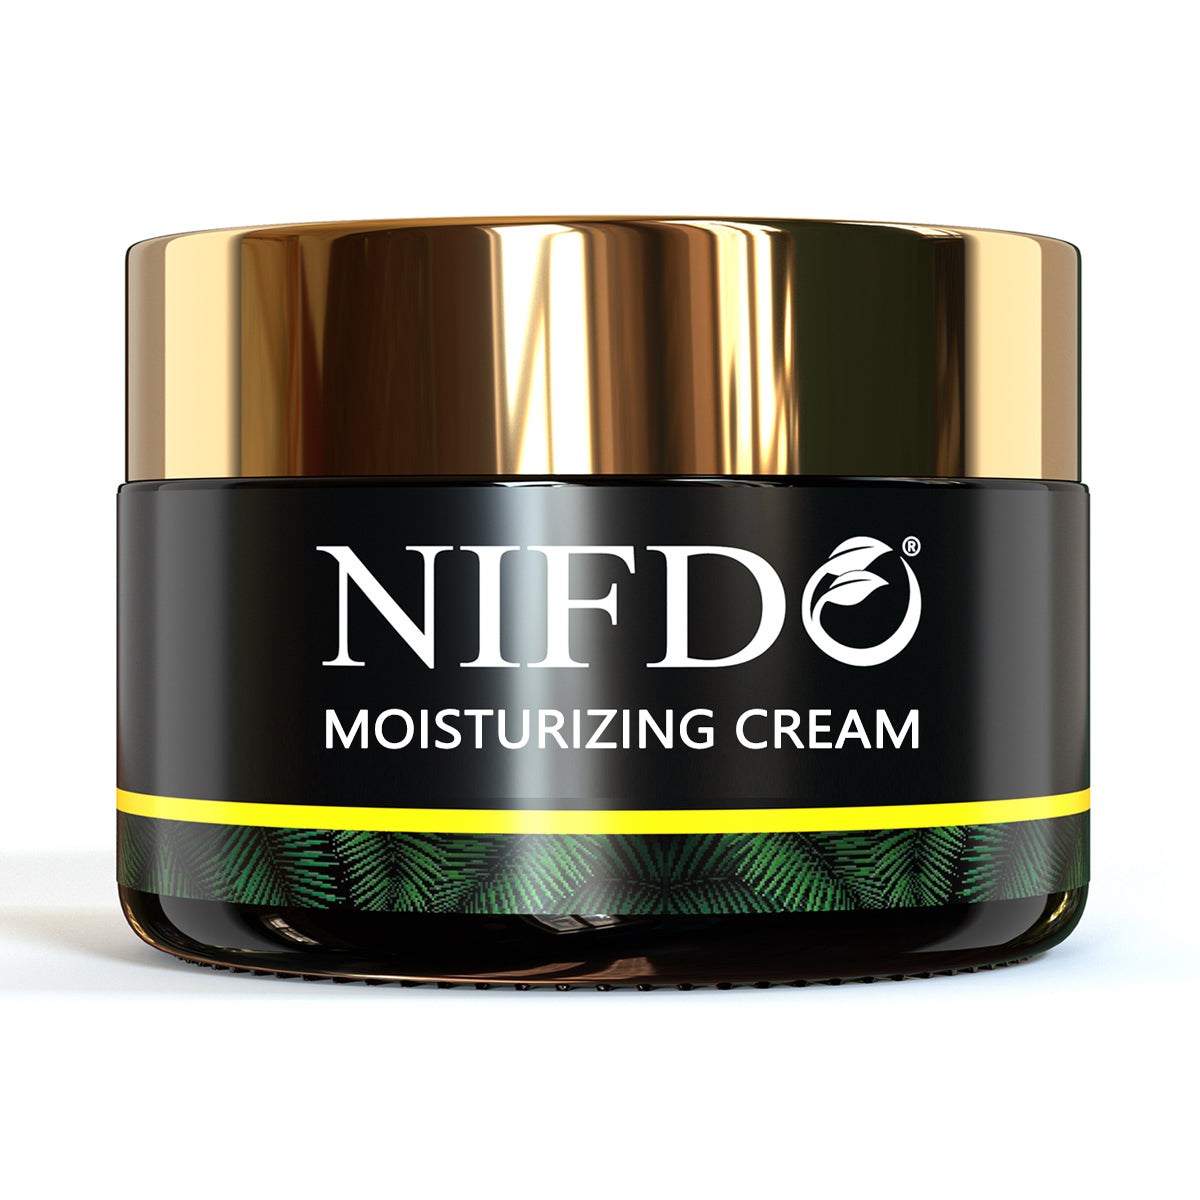 Nifdo Moisturizing Cream in Pakistan, Body and Face Moisturizer